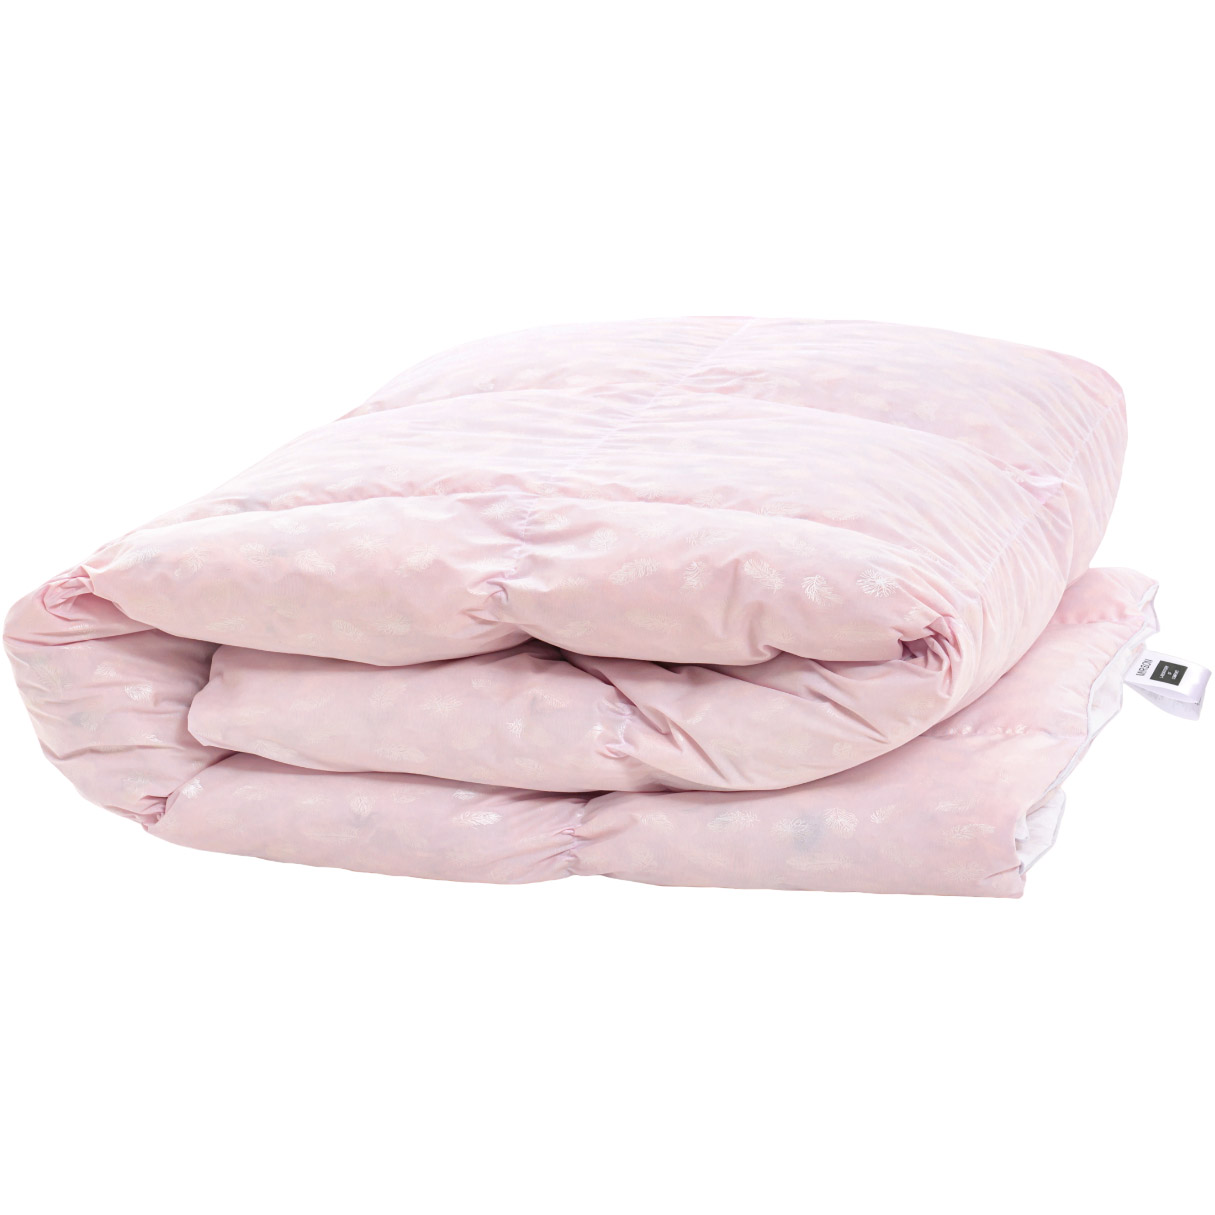 Одеяло пуховое MirSon Karmen №1841 Bio-Pink, 70% пух, 110x140 см, розовое (2200003013344) - фото 1